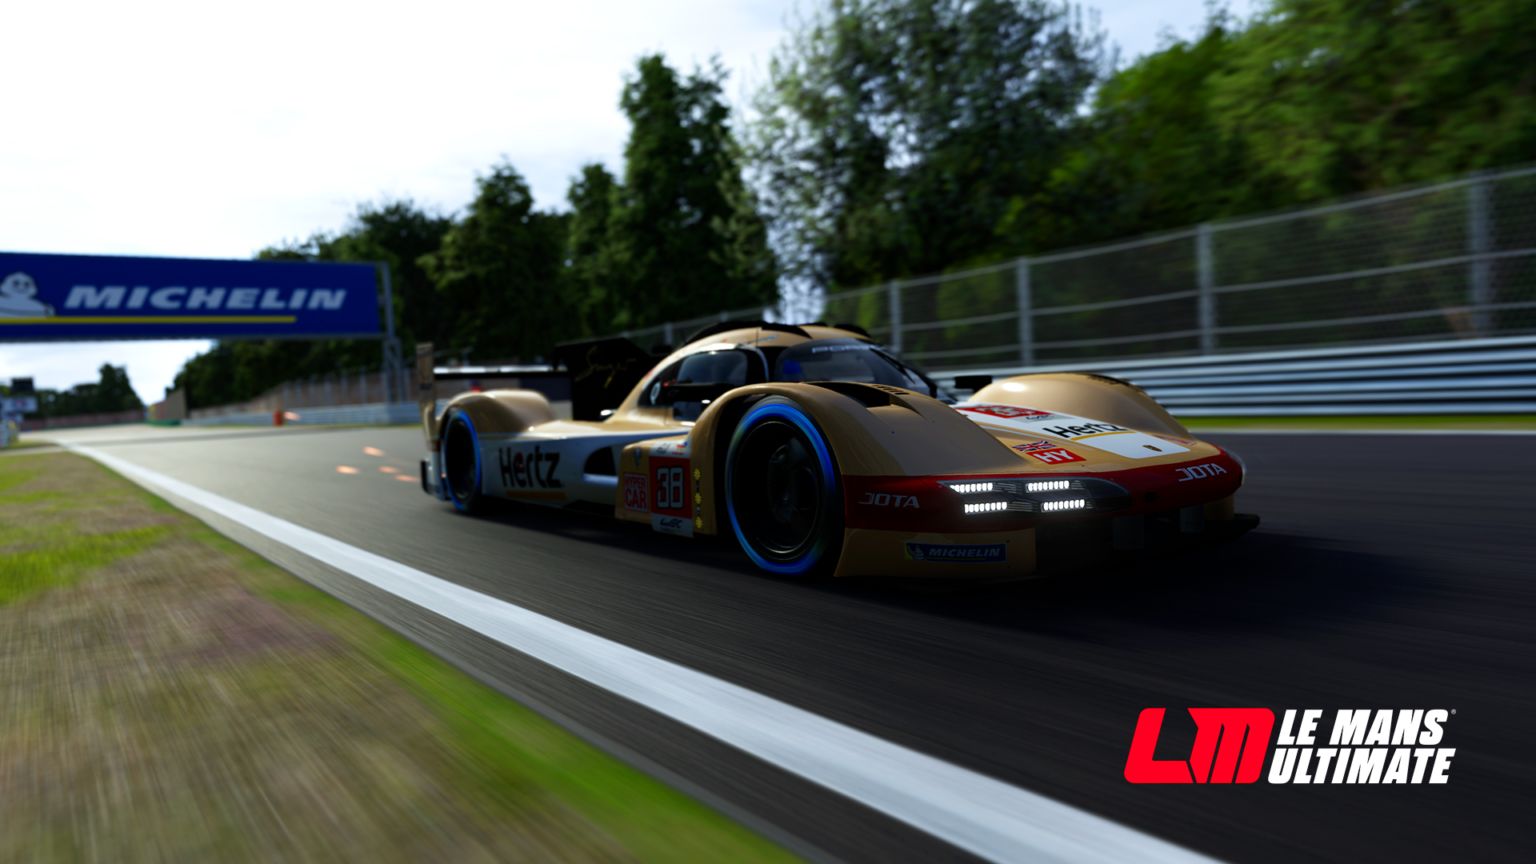 Le Mans Ultimate Jota Sport 963 LMDh